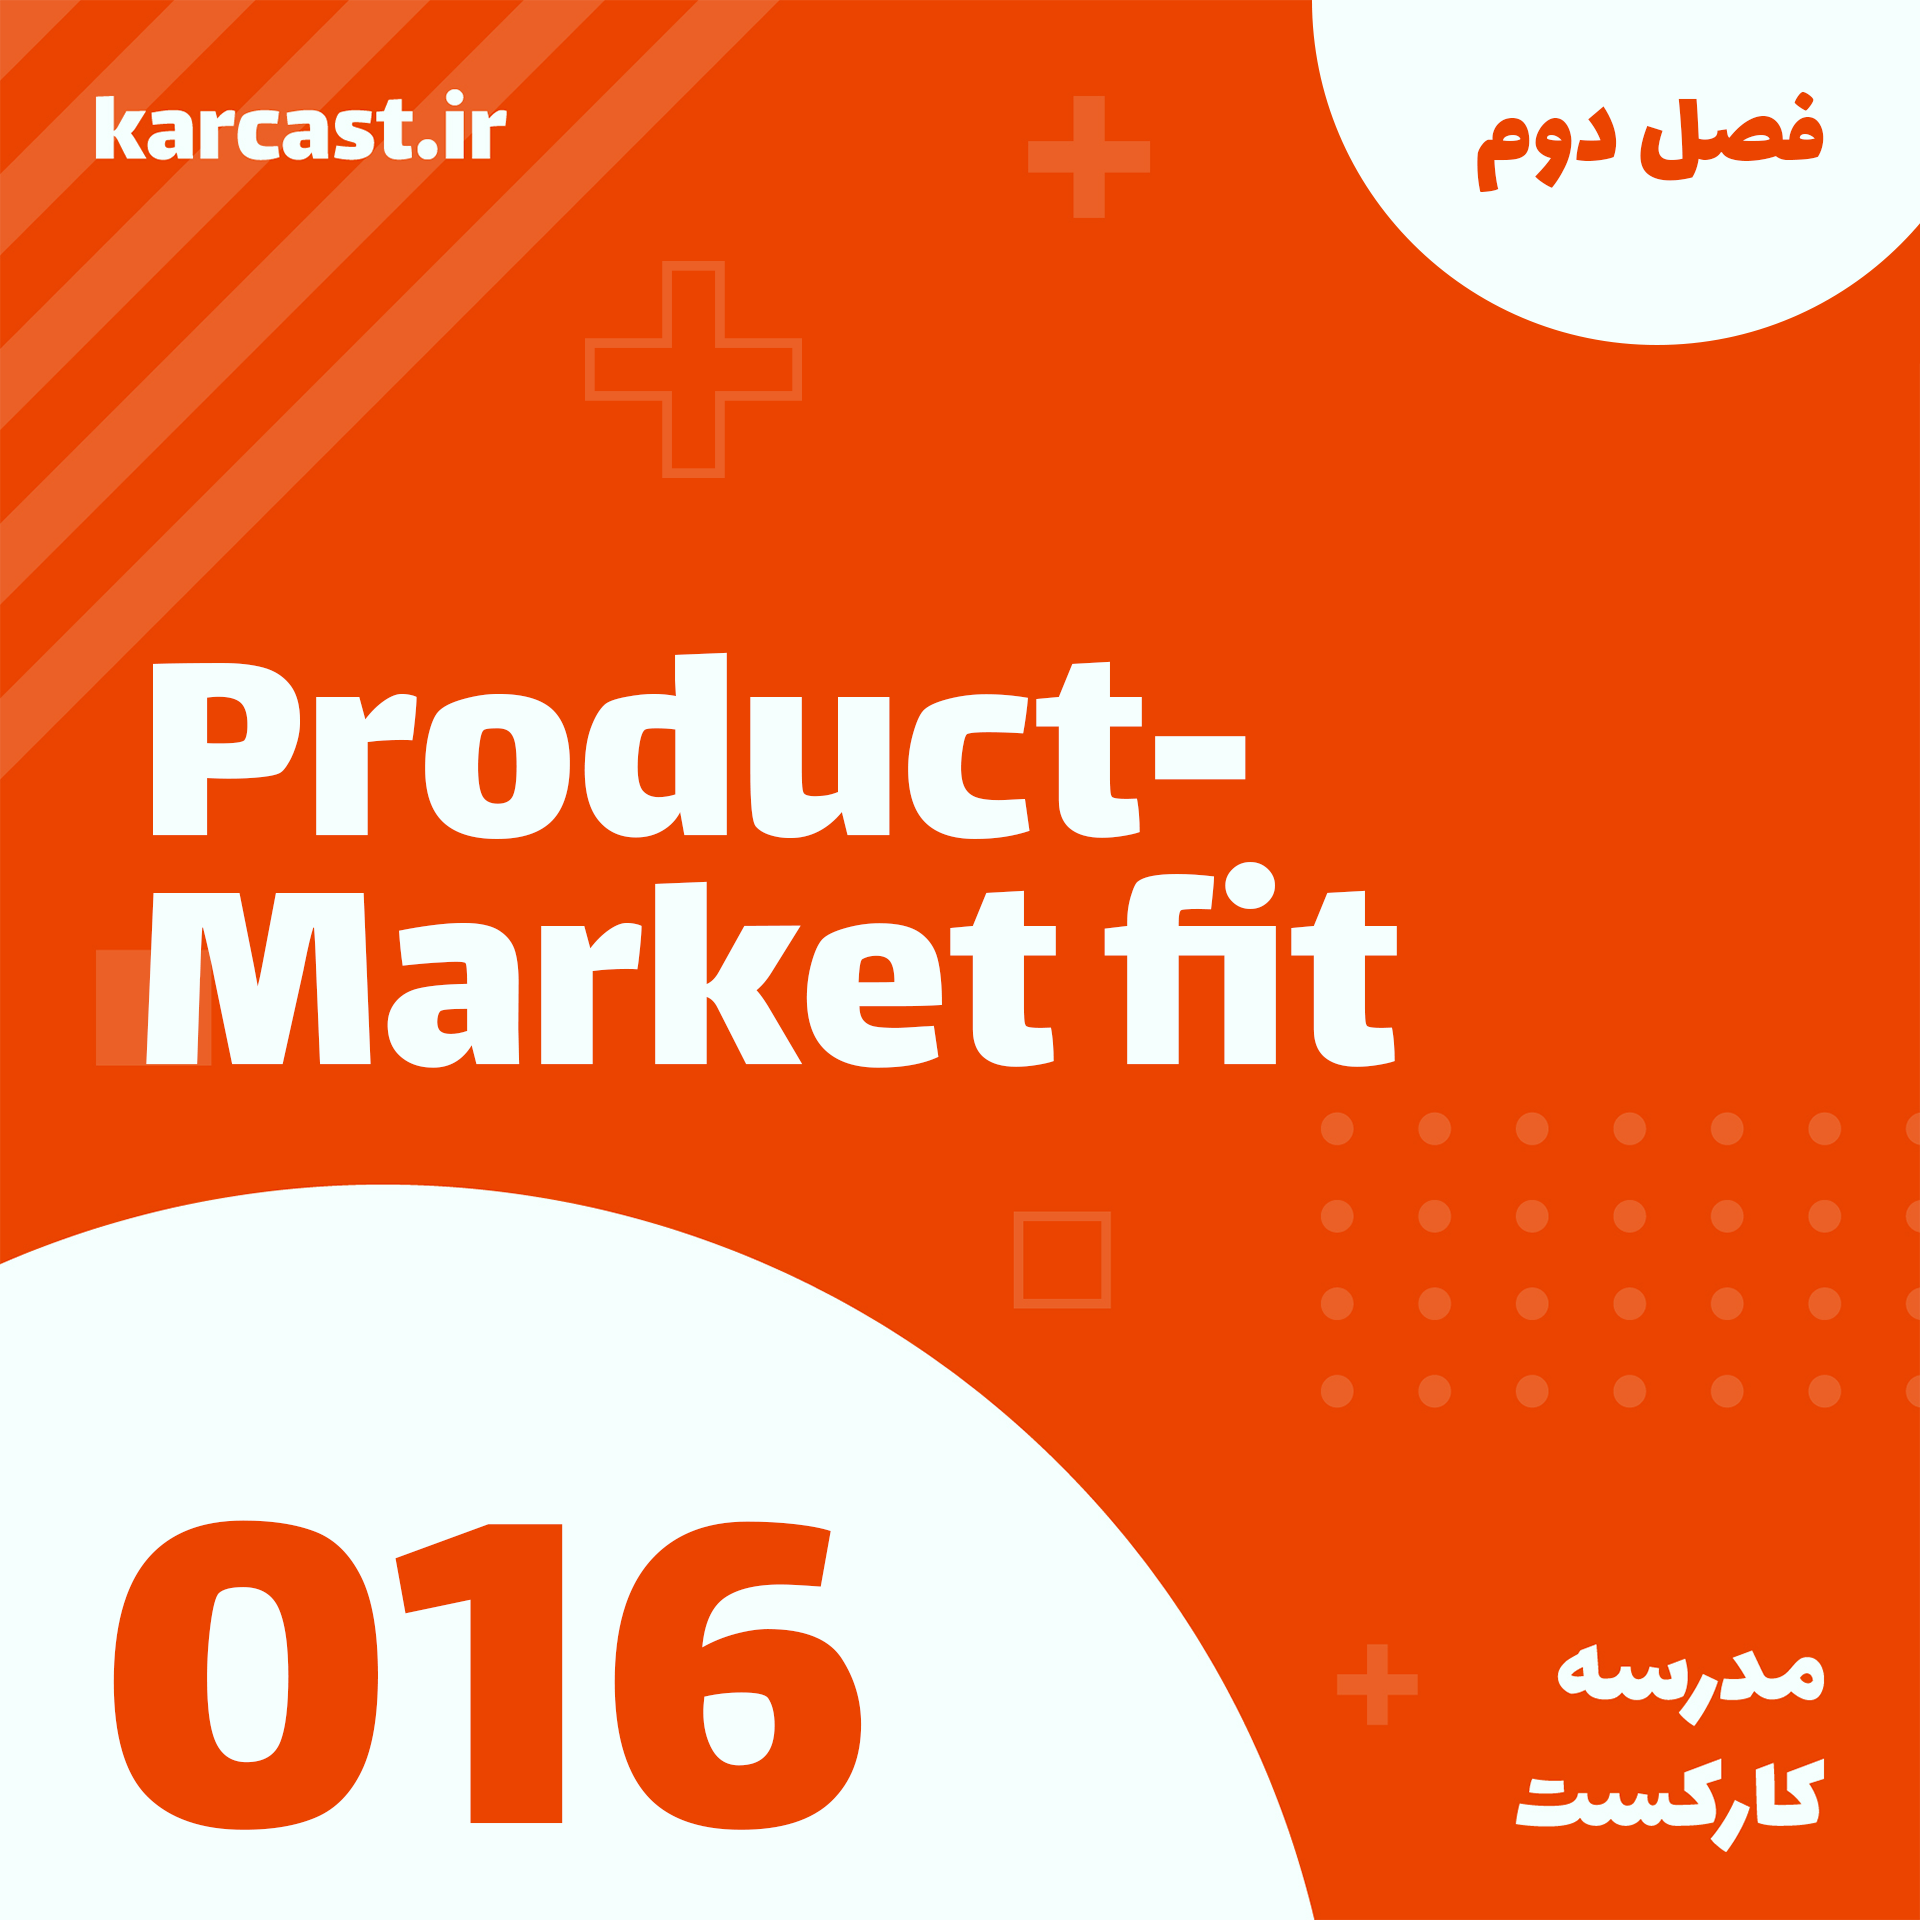 16: Product-Market fit